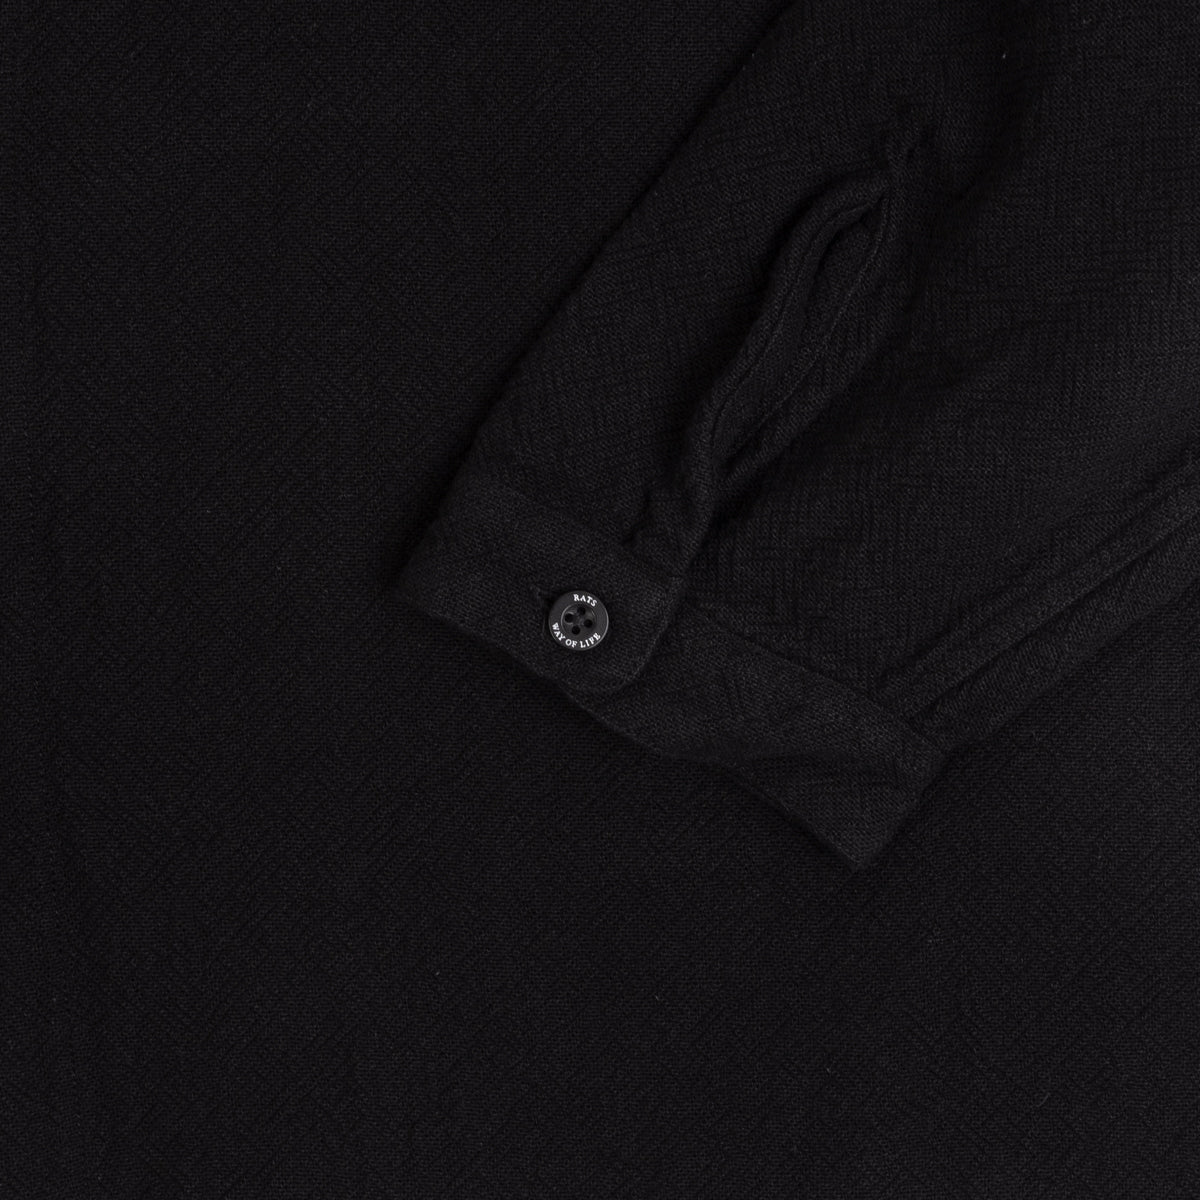 Stand Collar Dobby Shirt - Black